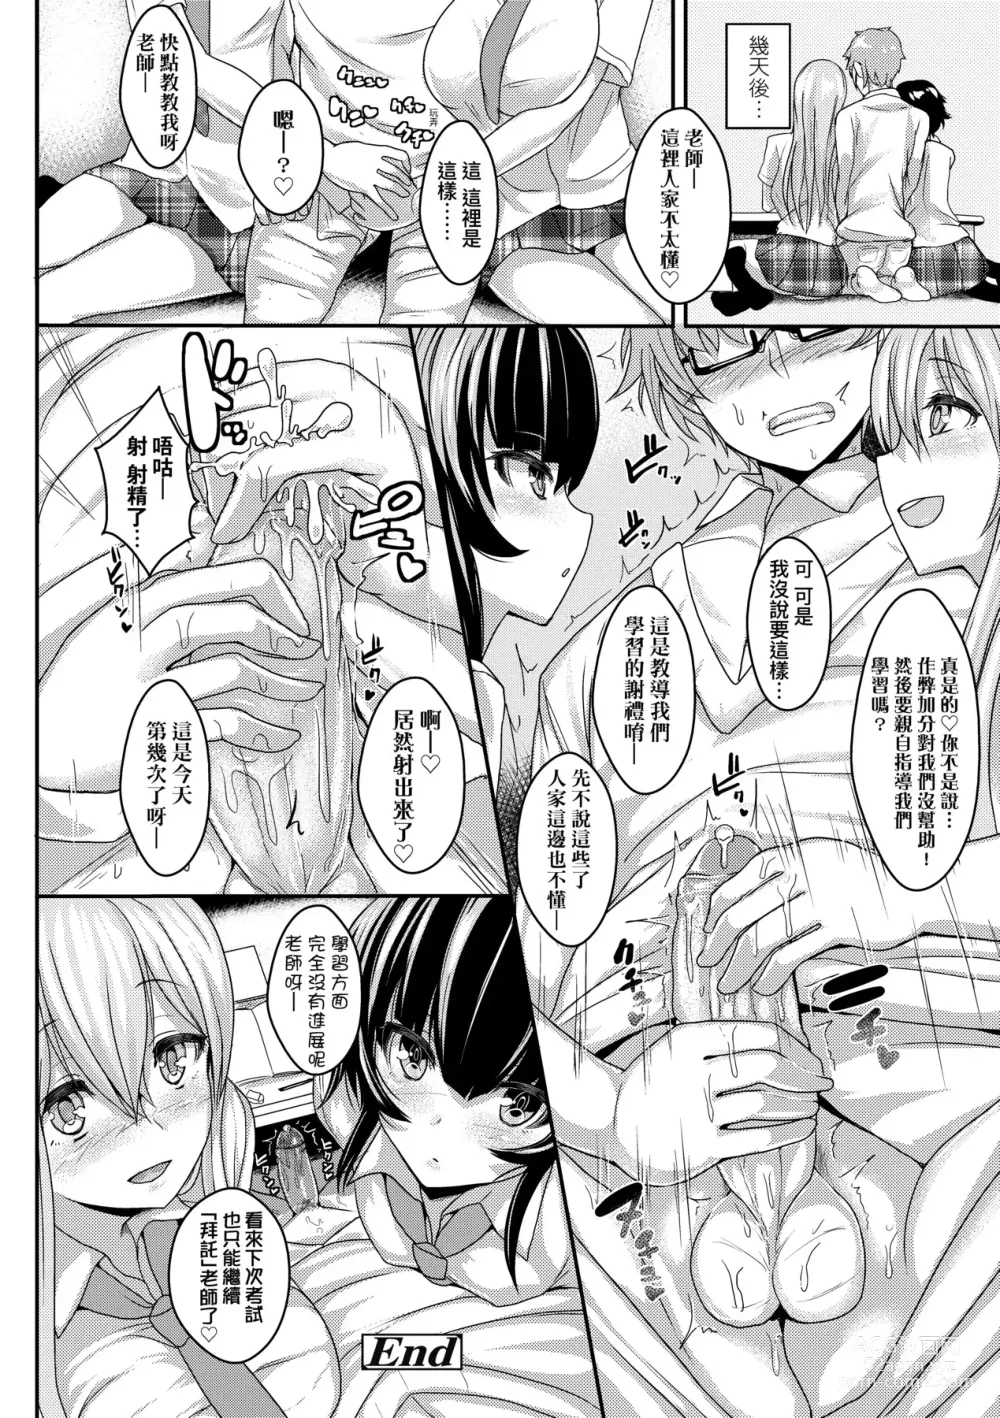 Page 31 of manga Iikedo, Naysyone. (decensored)